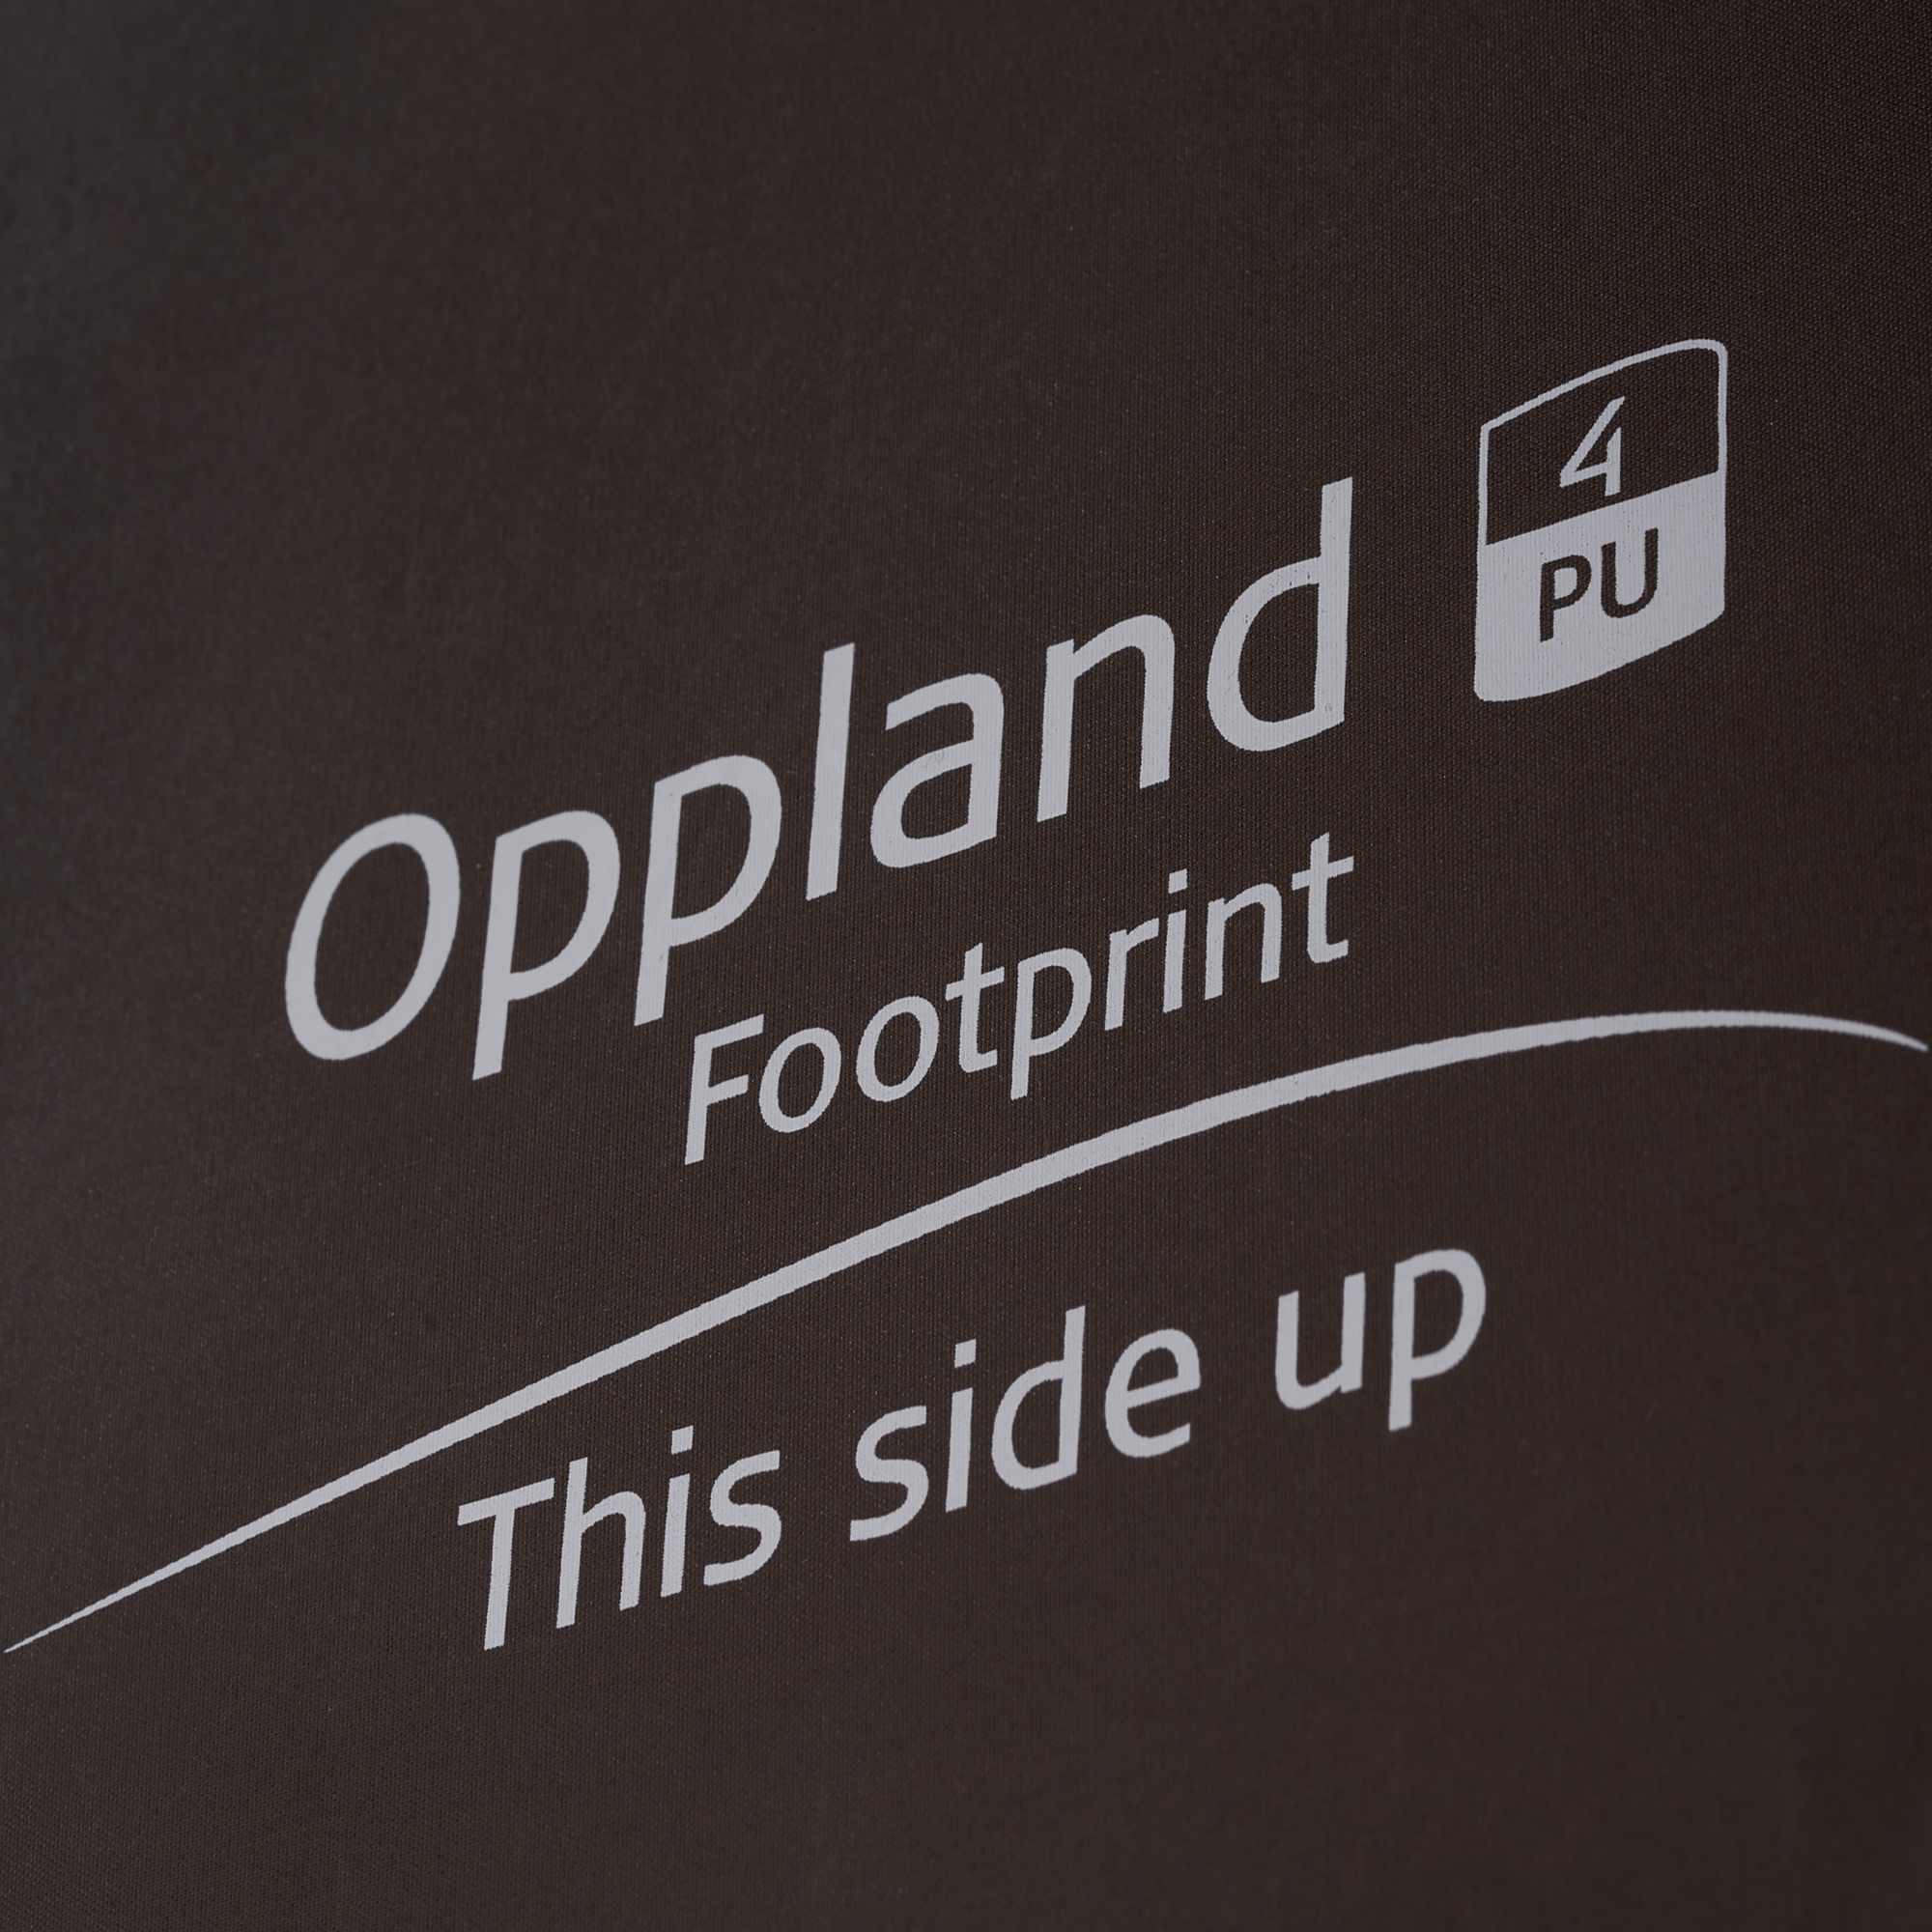 Nordisk Oppland 4 Tent Footprint Waterproof Groundsheet